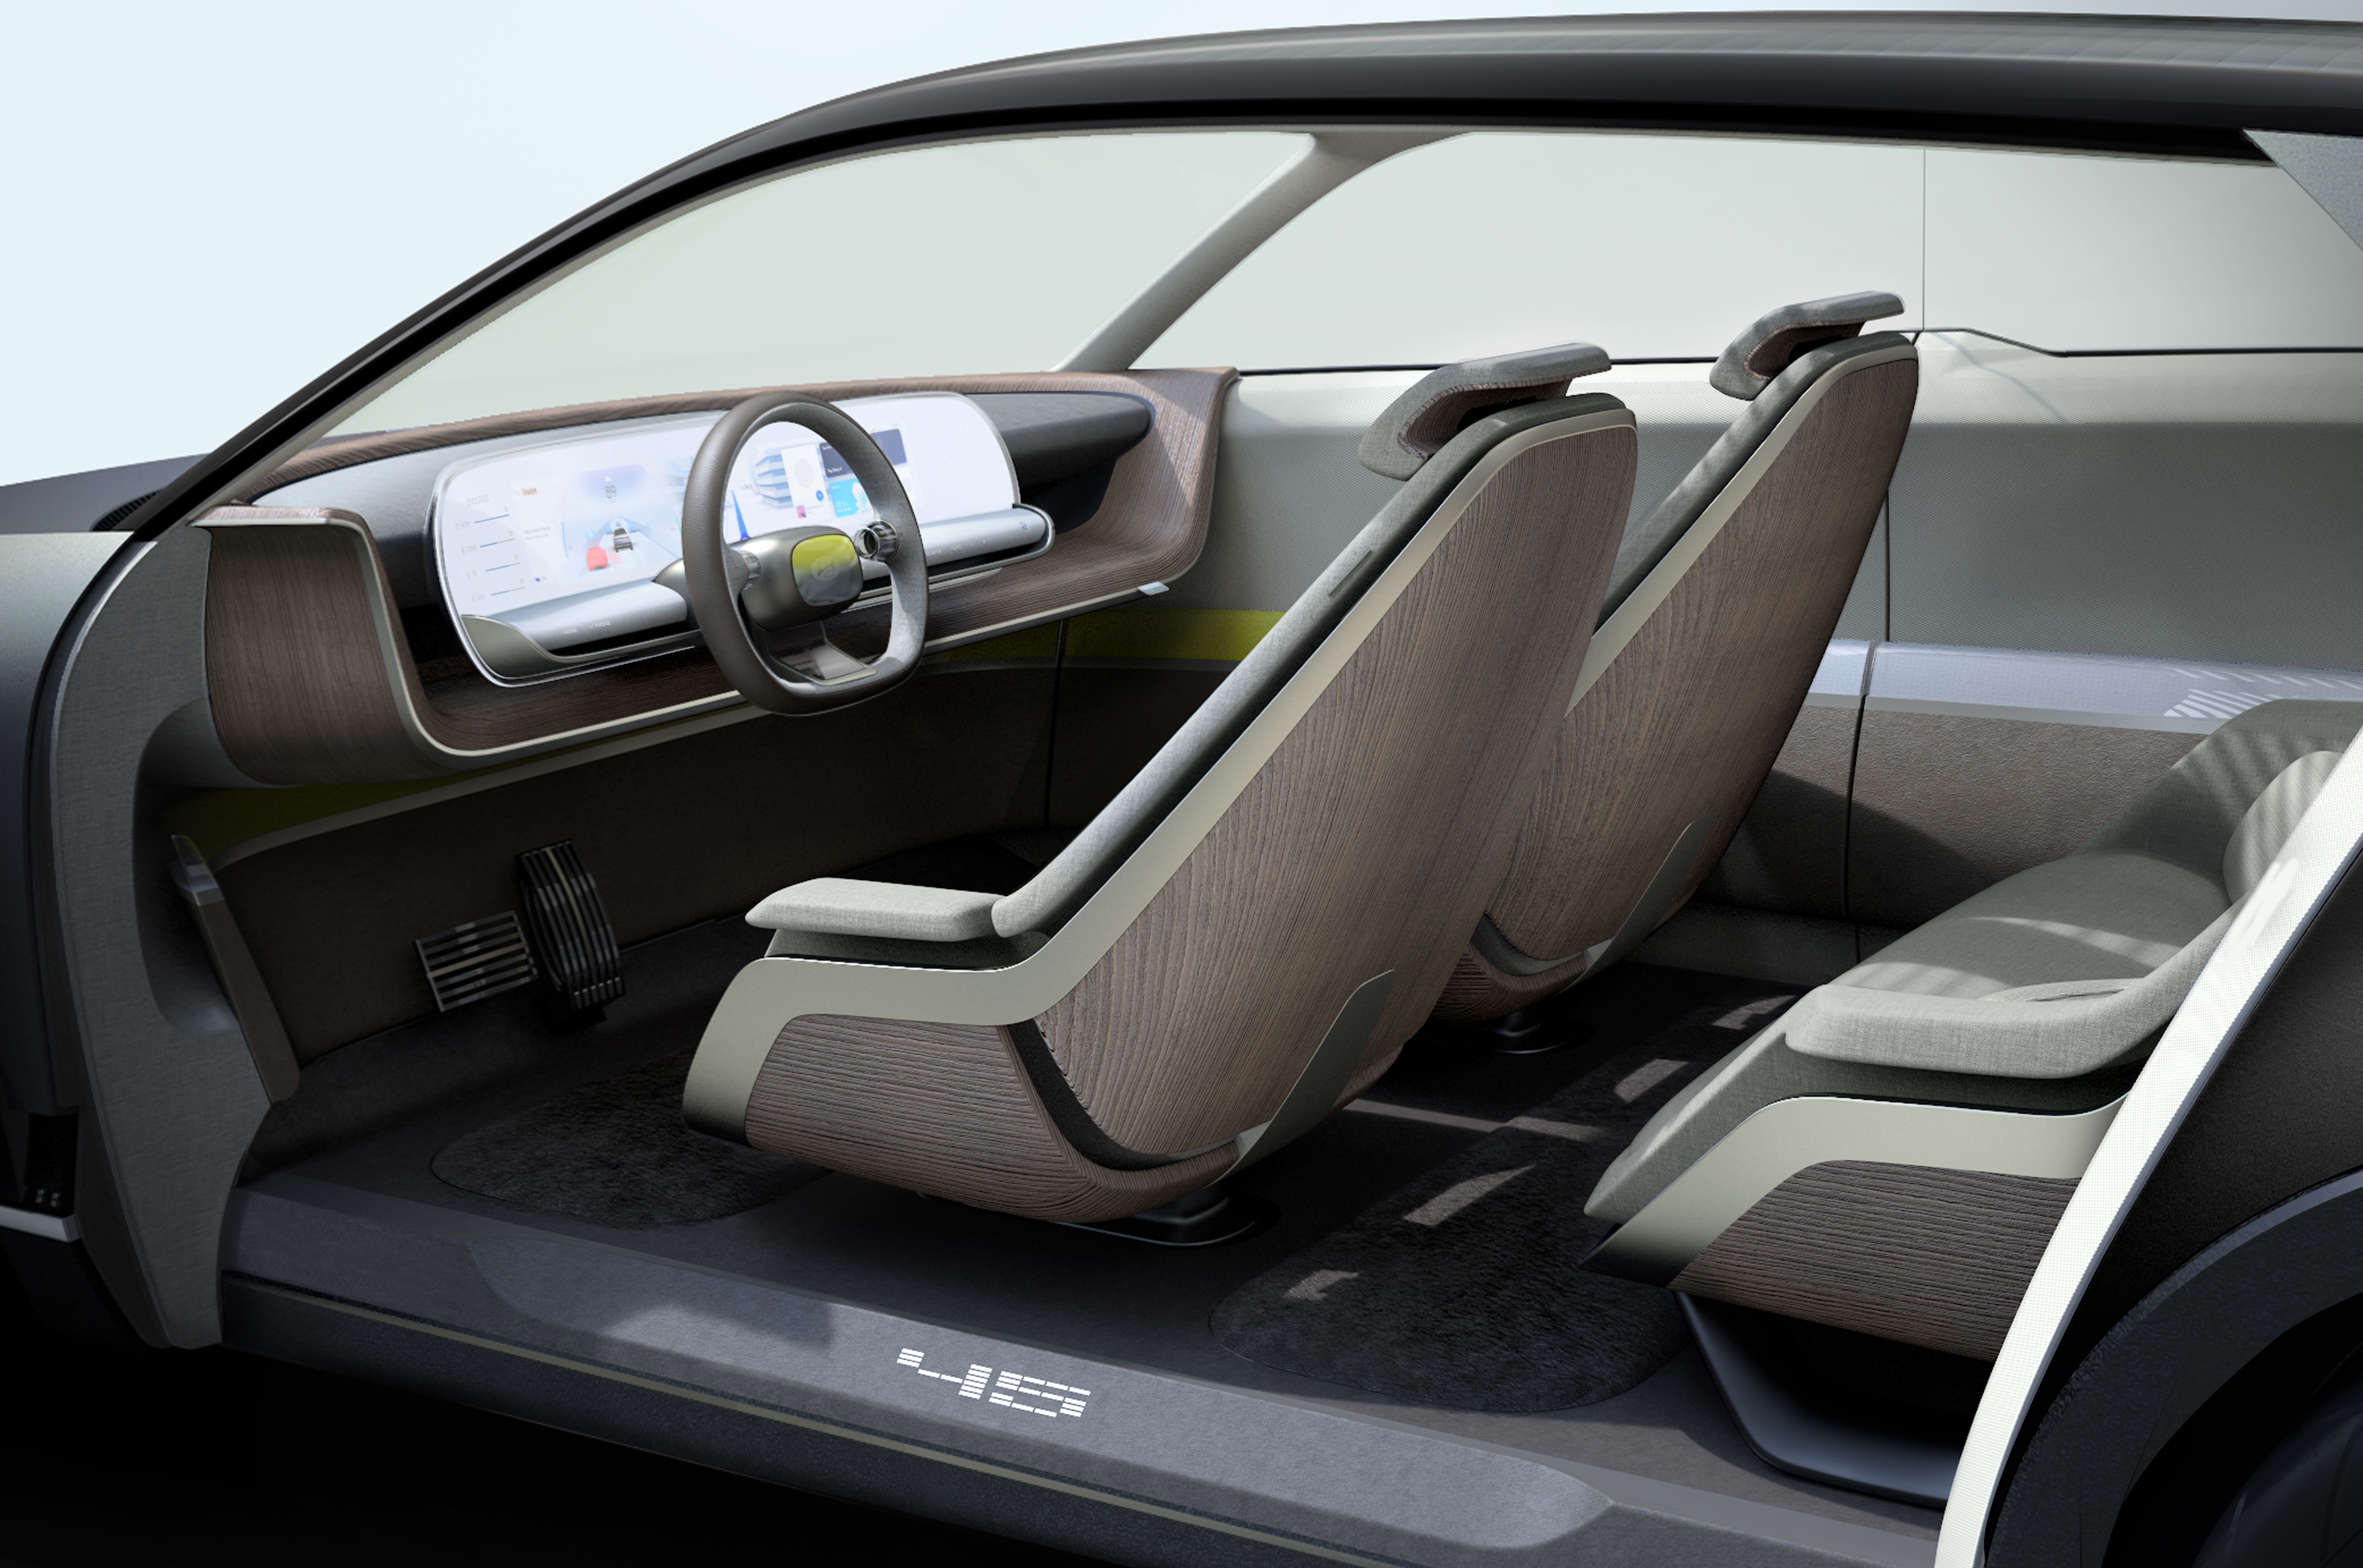 2019 Hyundai 45 EV Concept